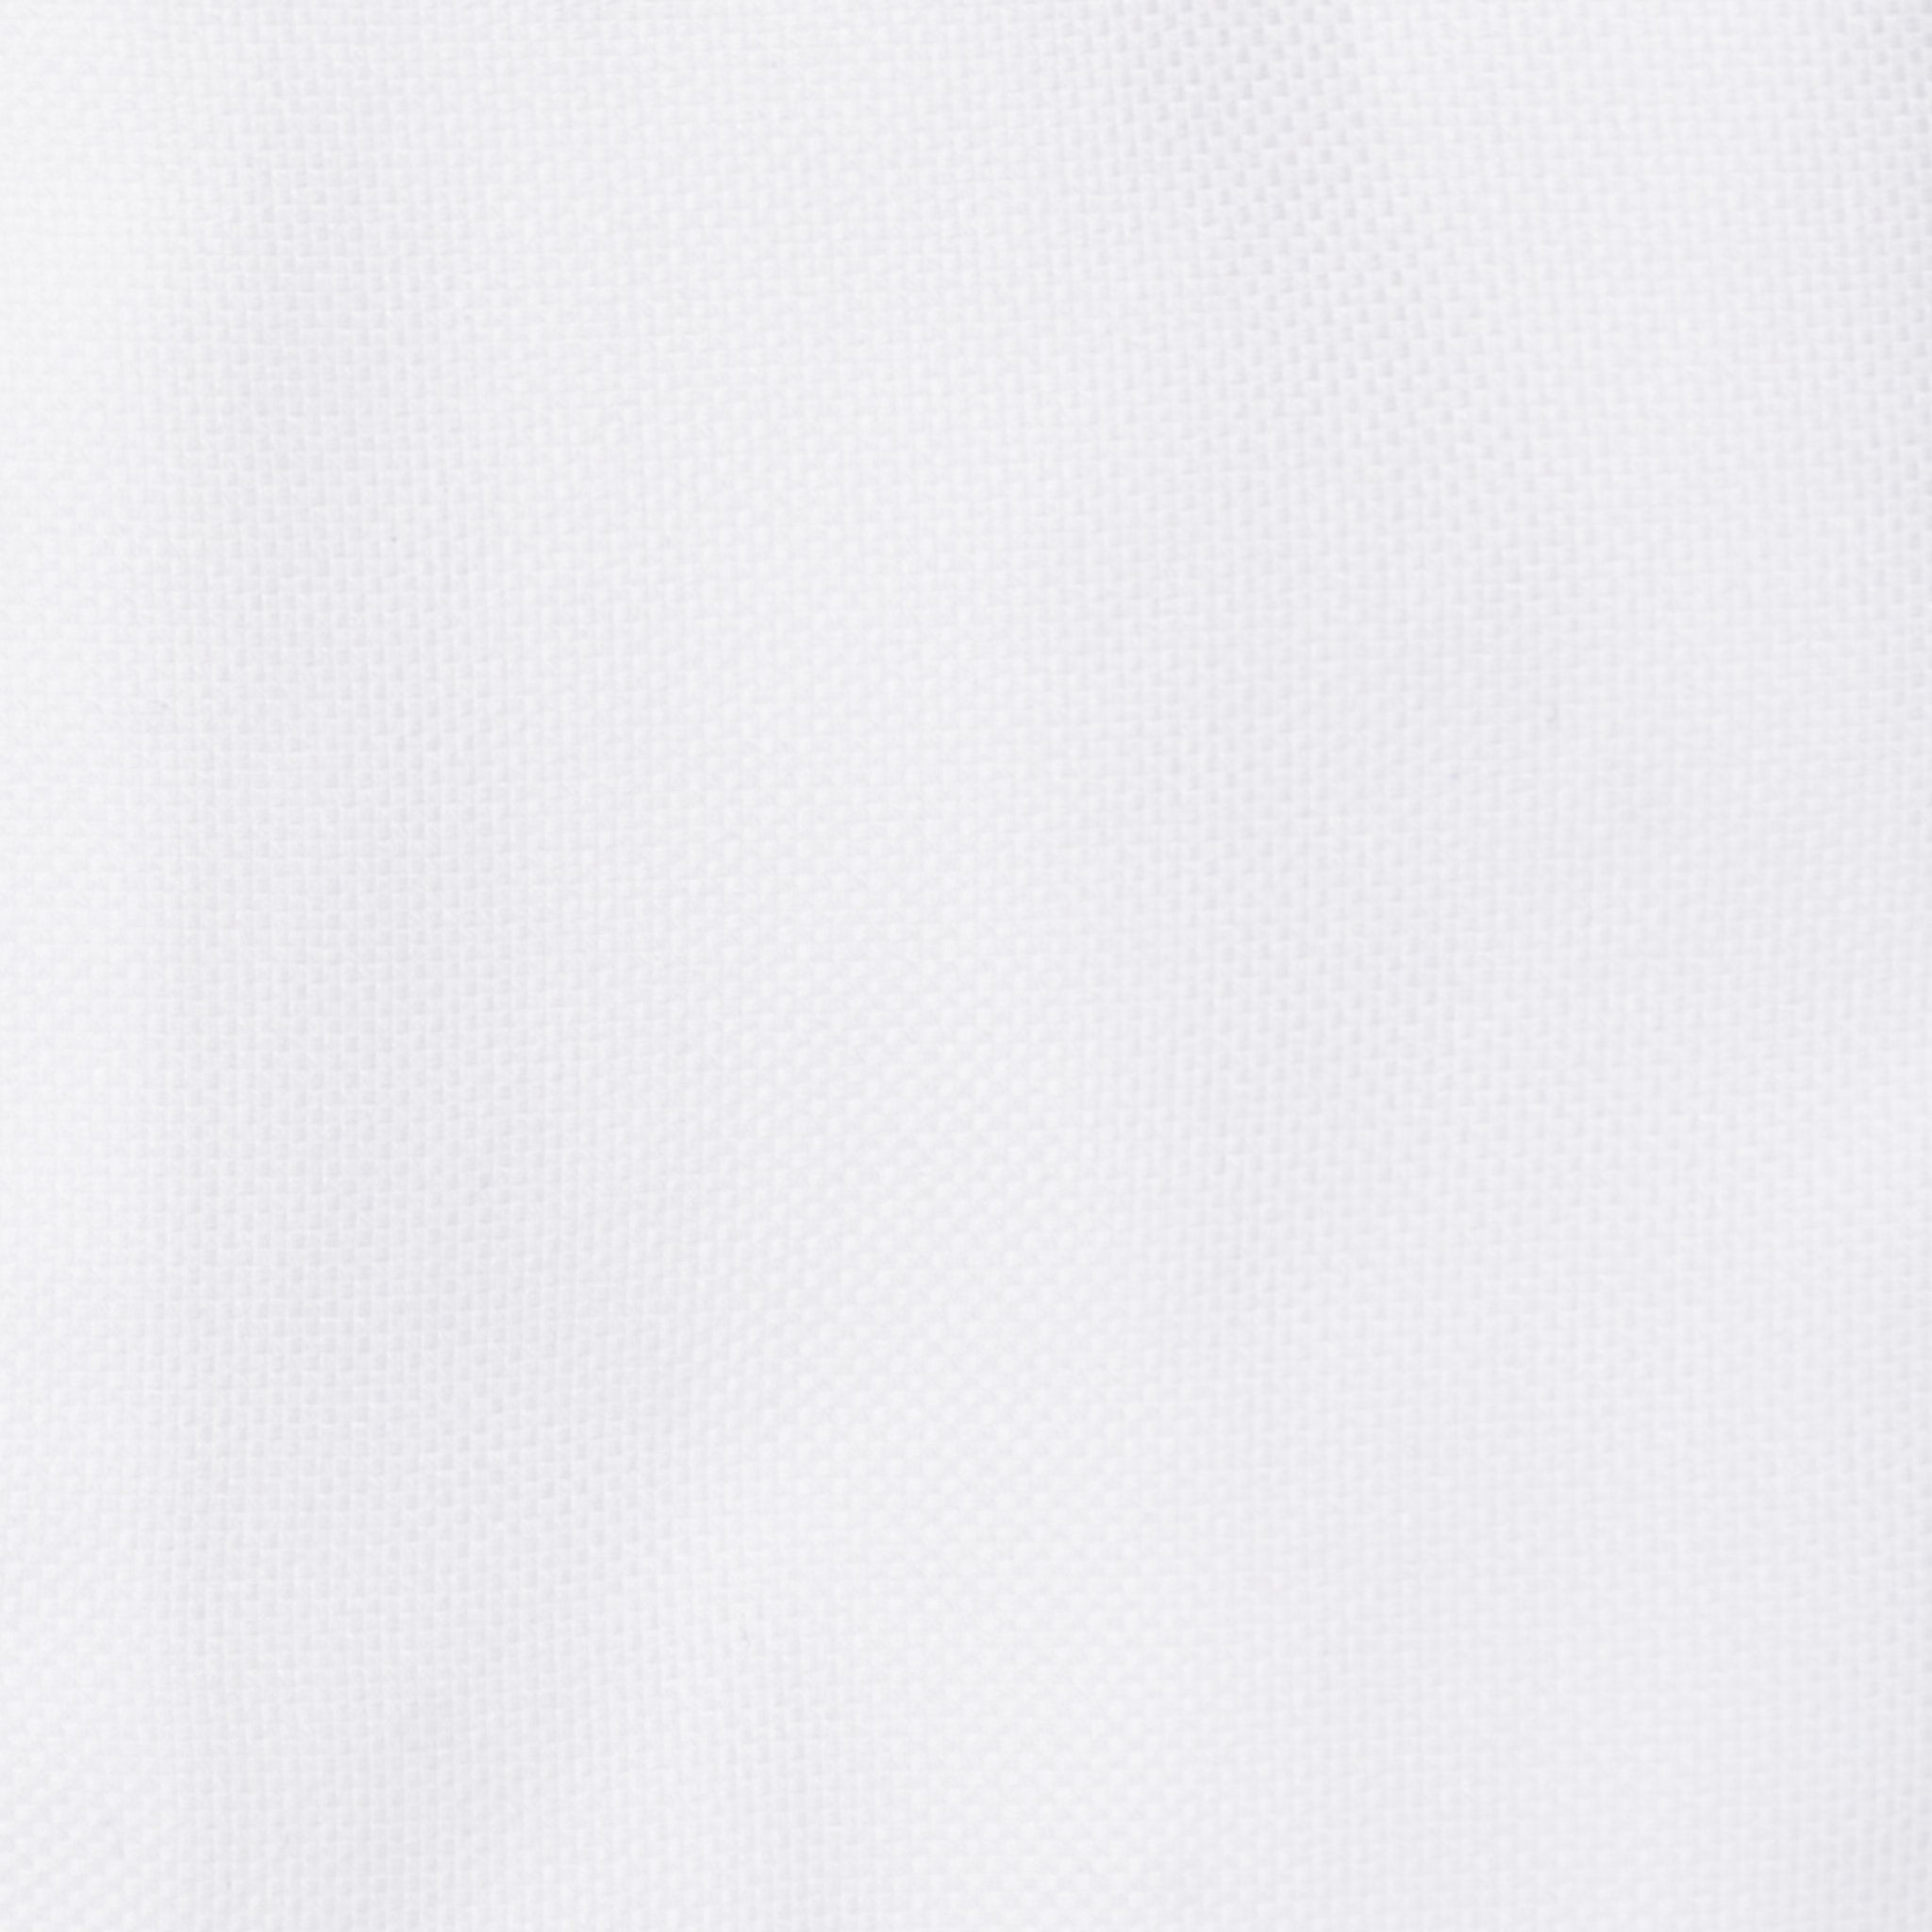 SARTORIO by KITON White Royal Oxford Cotton Dress Shirt NEW Slim Fit SARTORIO